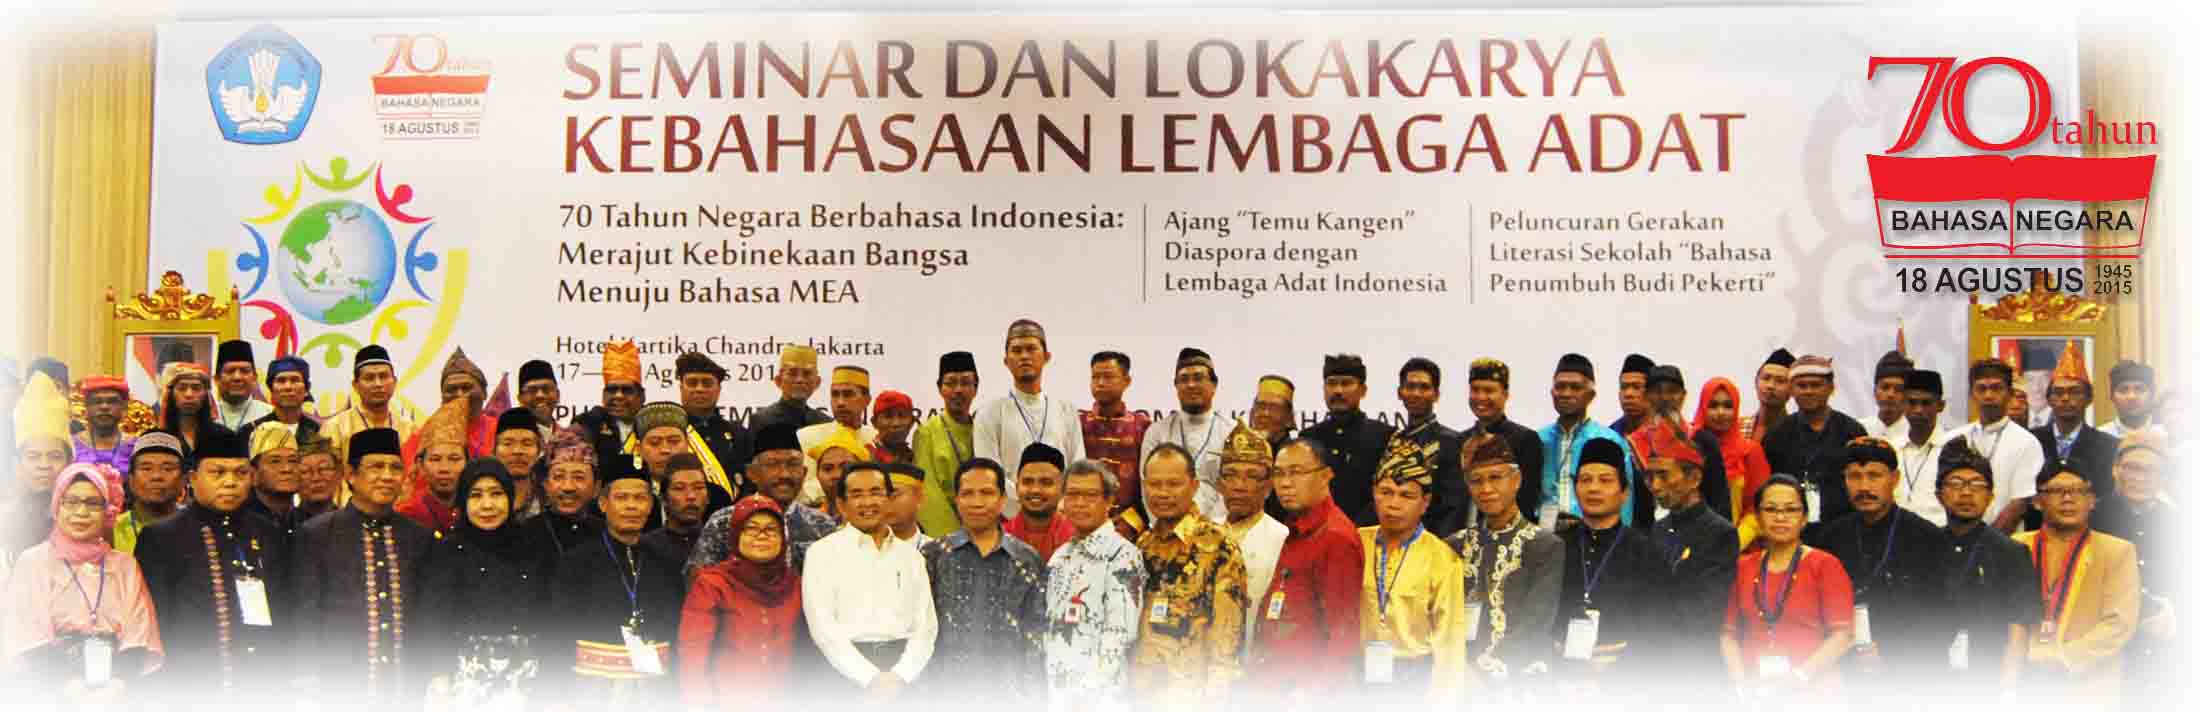 70 Tahun Negara Berbahasa Indonesia: Merajut Kebinekaan Bangsa Menuju Bahasa MEA